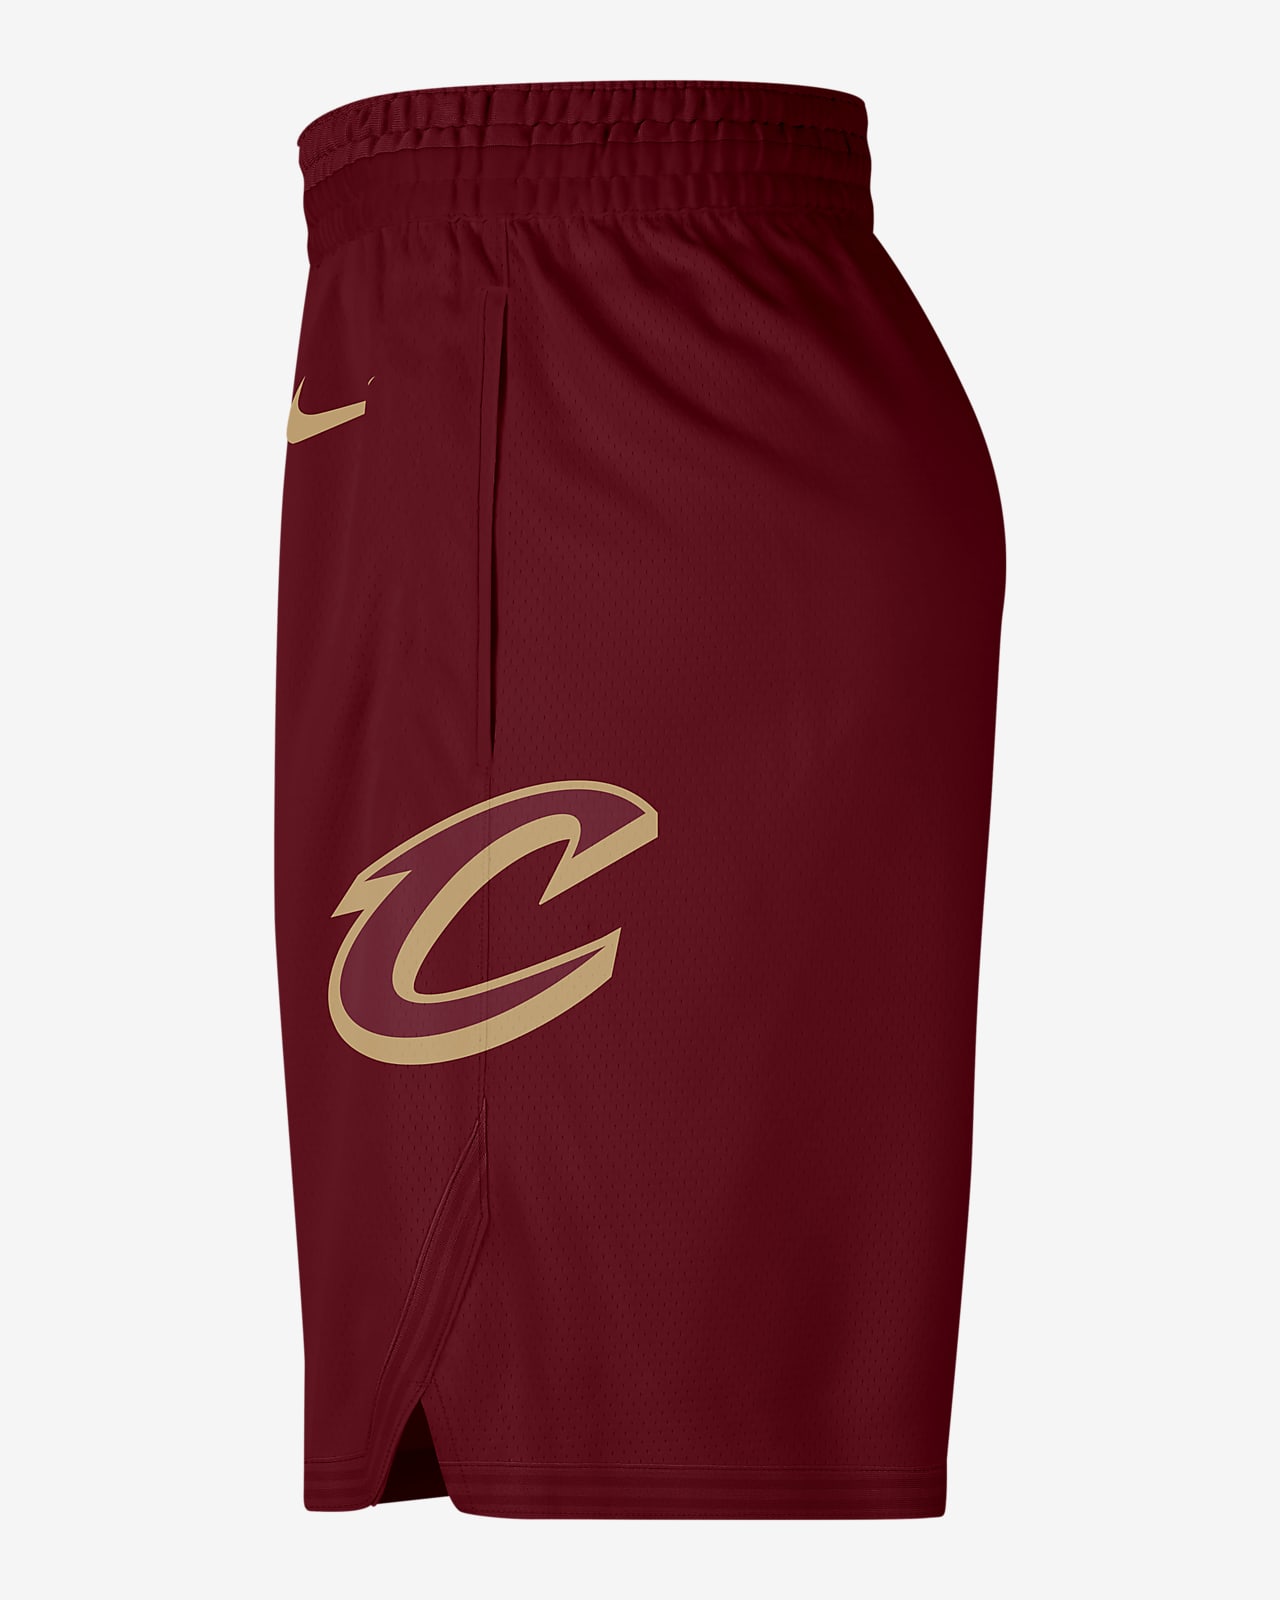 Cavaliers Shorts 